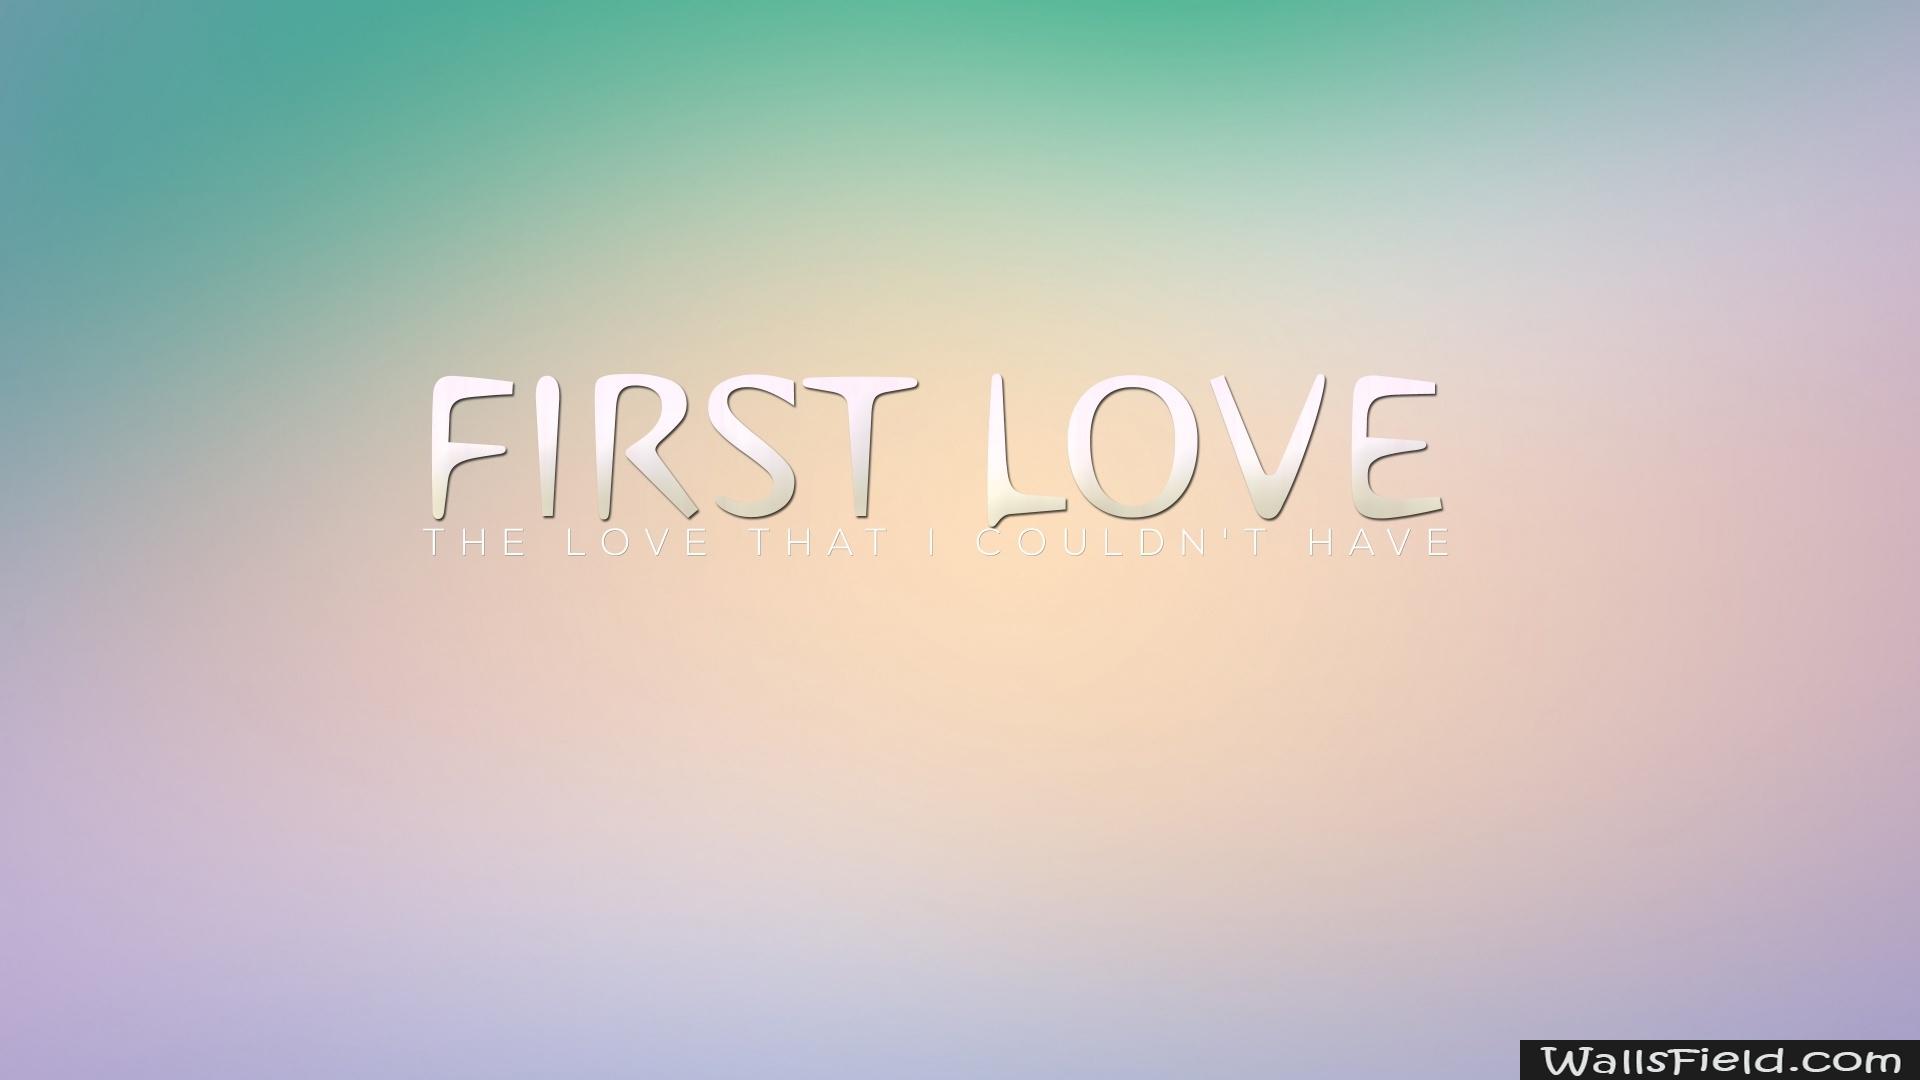 First Love.com. Free HD Wallpaper